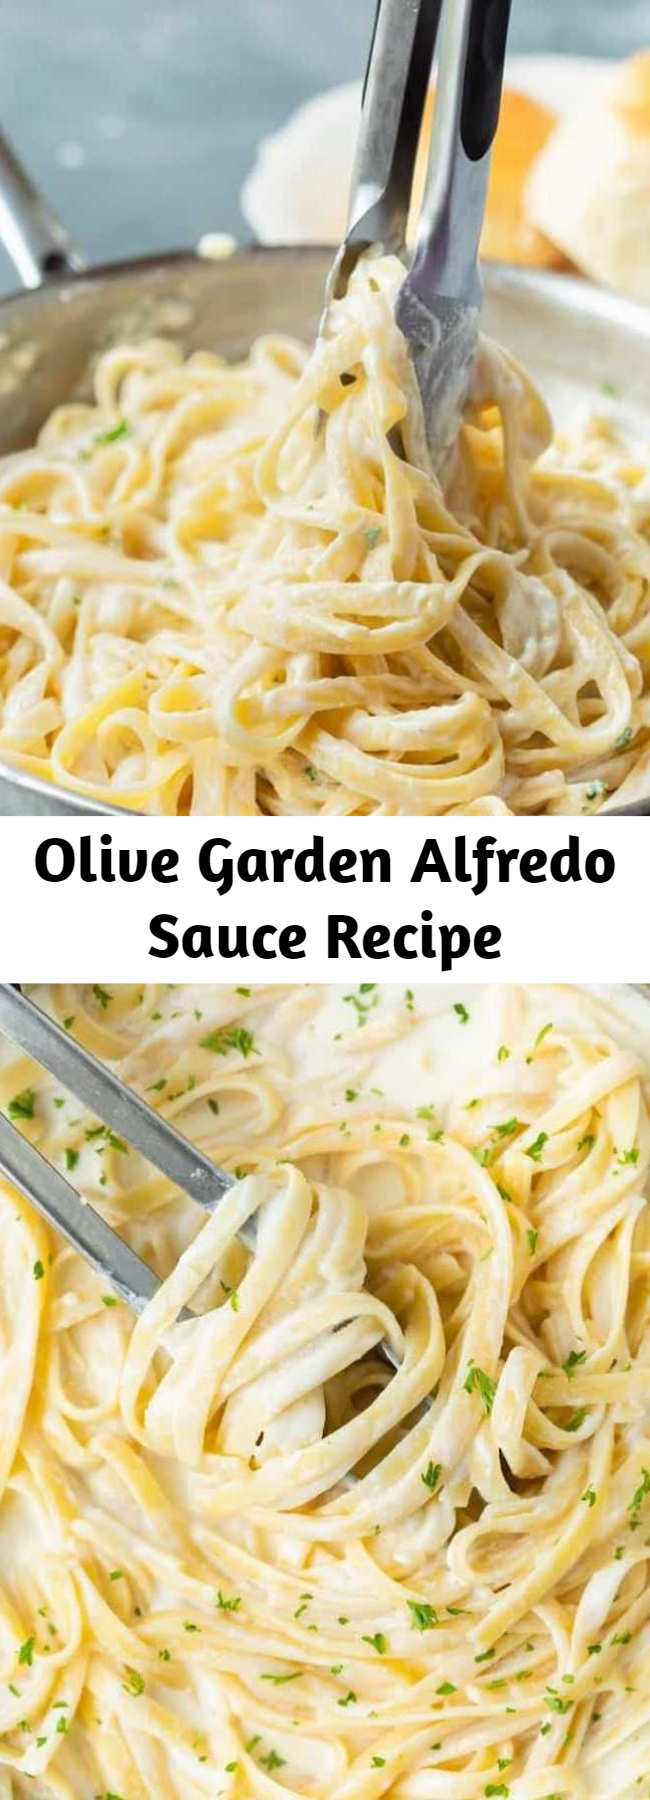 Olive Garden Alfredo Sauce Recipe - Make Olive Garden's Alfredo Sauce Recipe at home in just 20 minutes! Pair it with Fettuccine for an easy dinner idea the whole family will love! #alfredo #olivegarden #fettuccine #pasta #italian #dinner